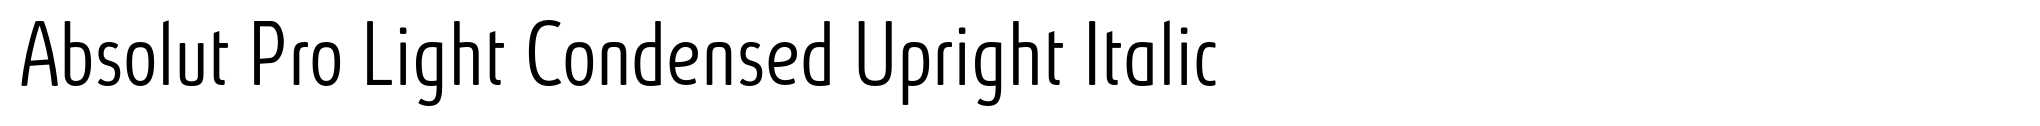 Absolut Pro Light Condensed Upright Italic image